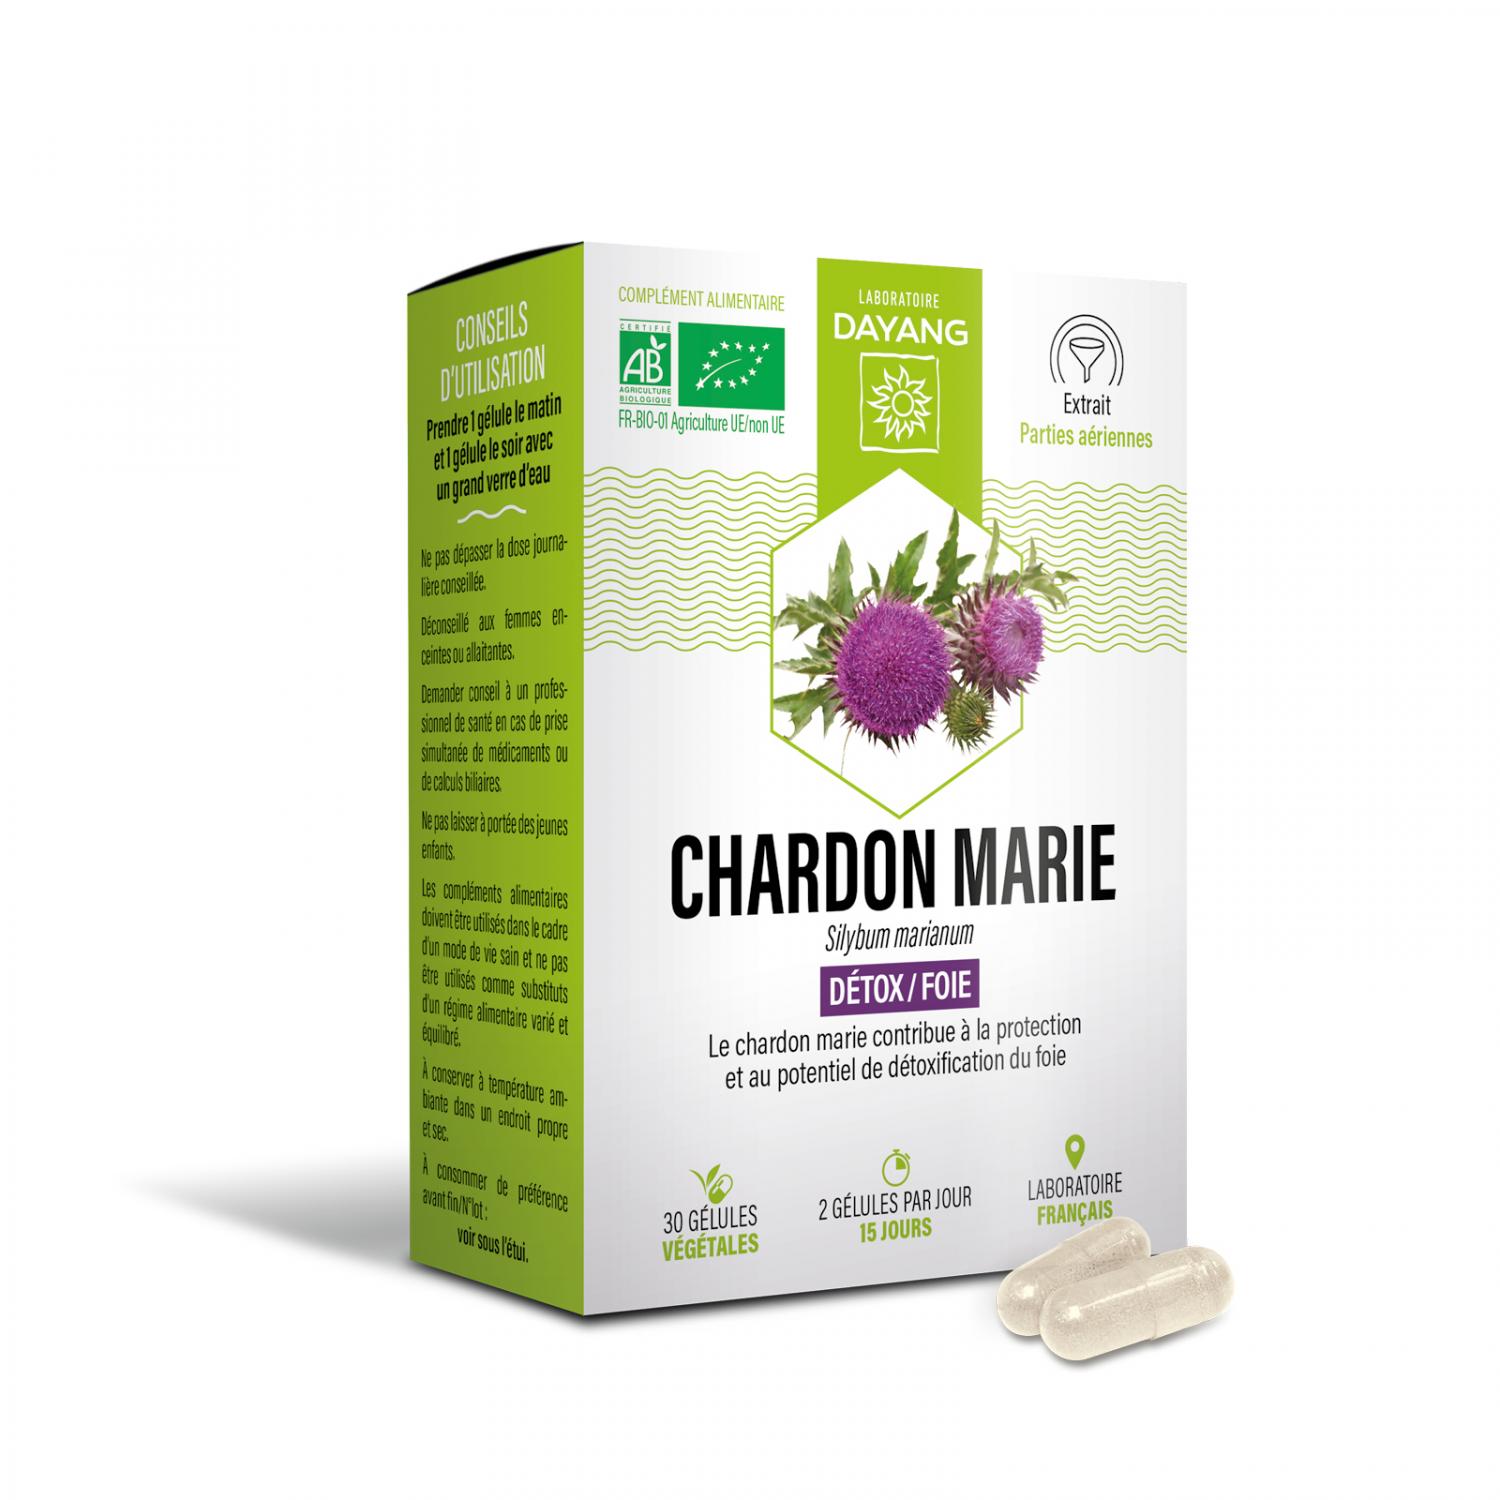 Charbon marie bio Dayang - boite de 30 gélules